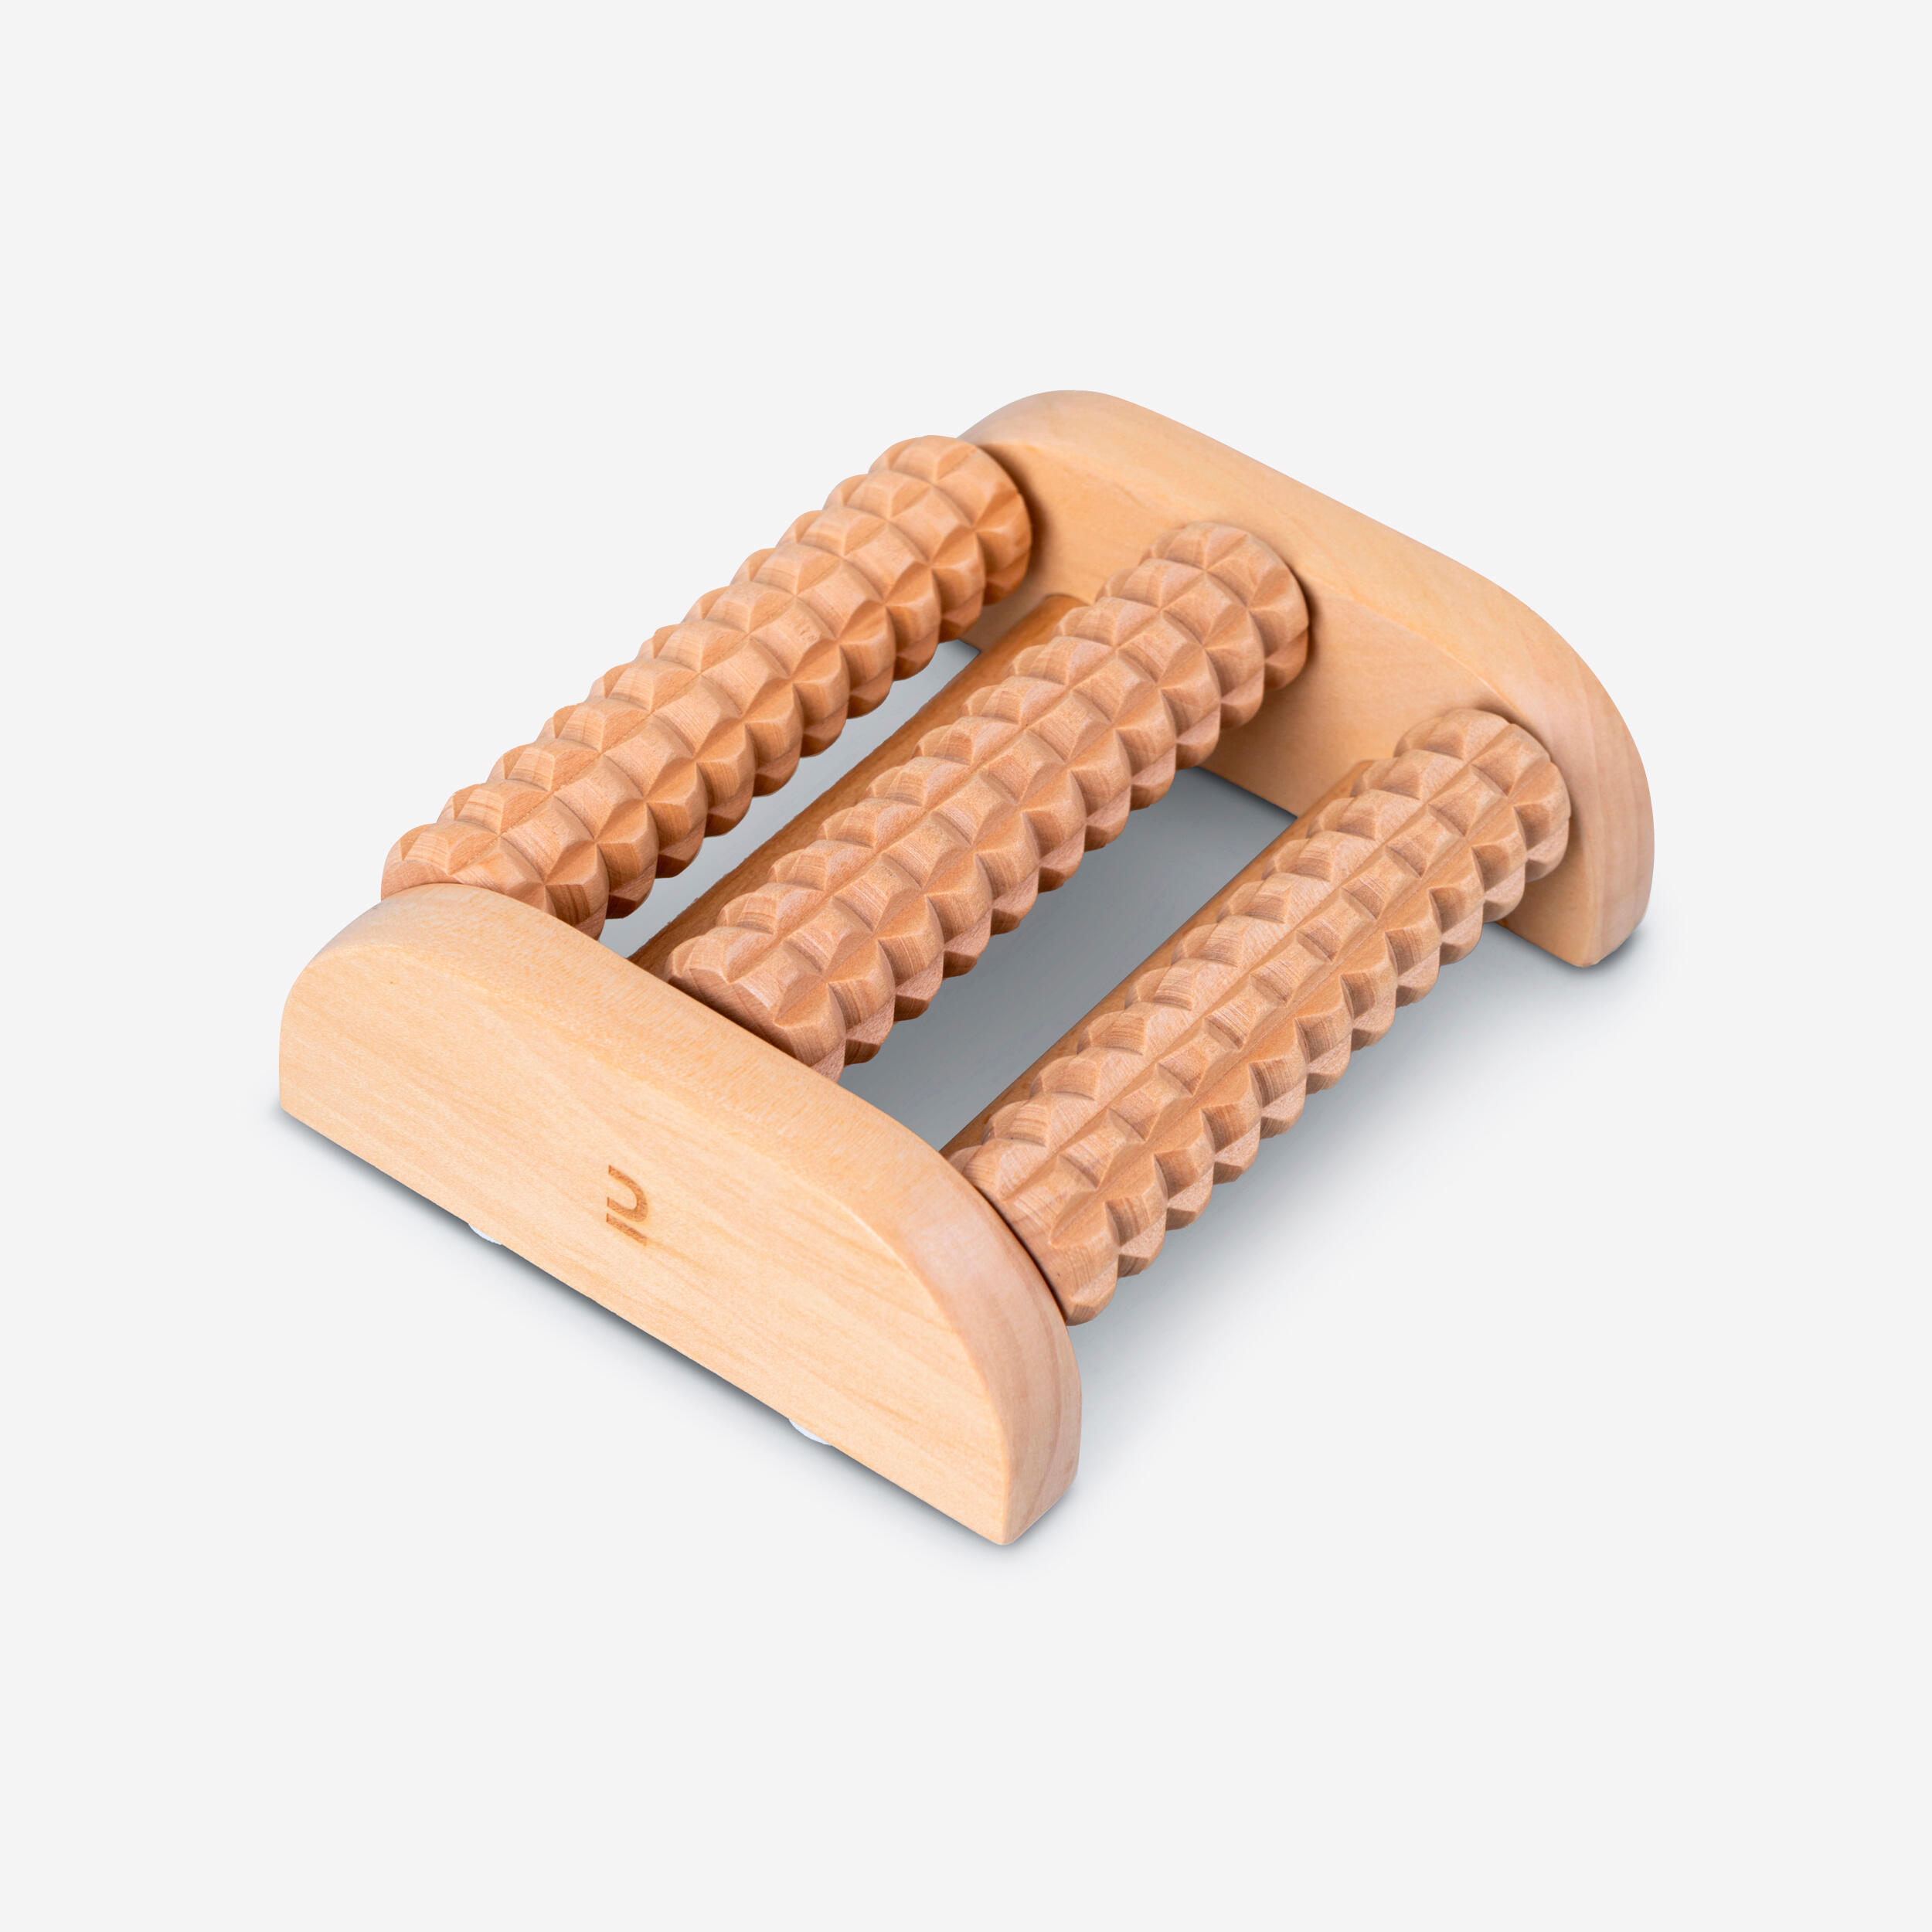 Wooden foot massage tool 1/5